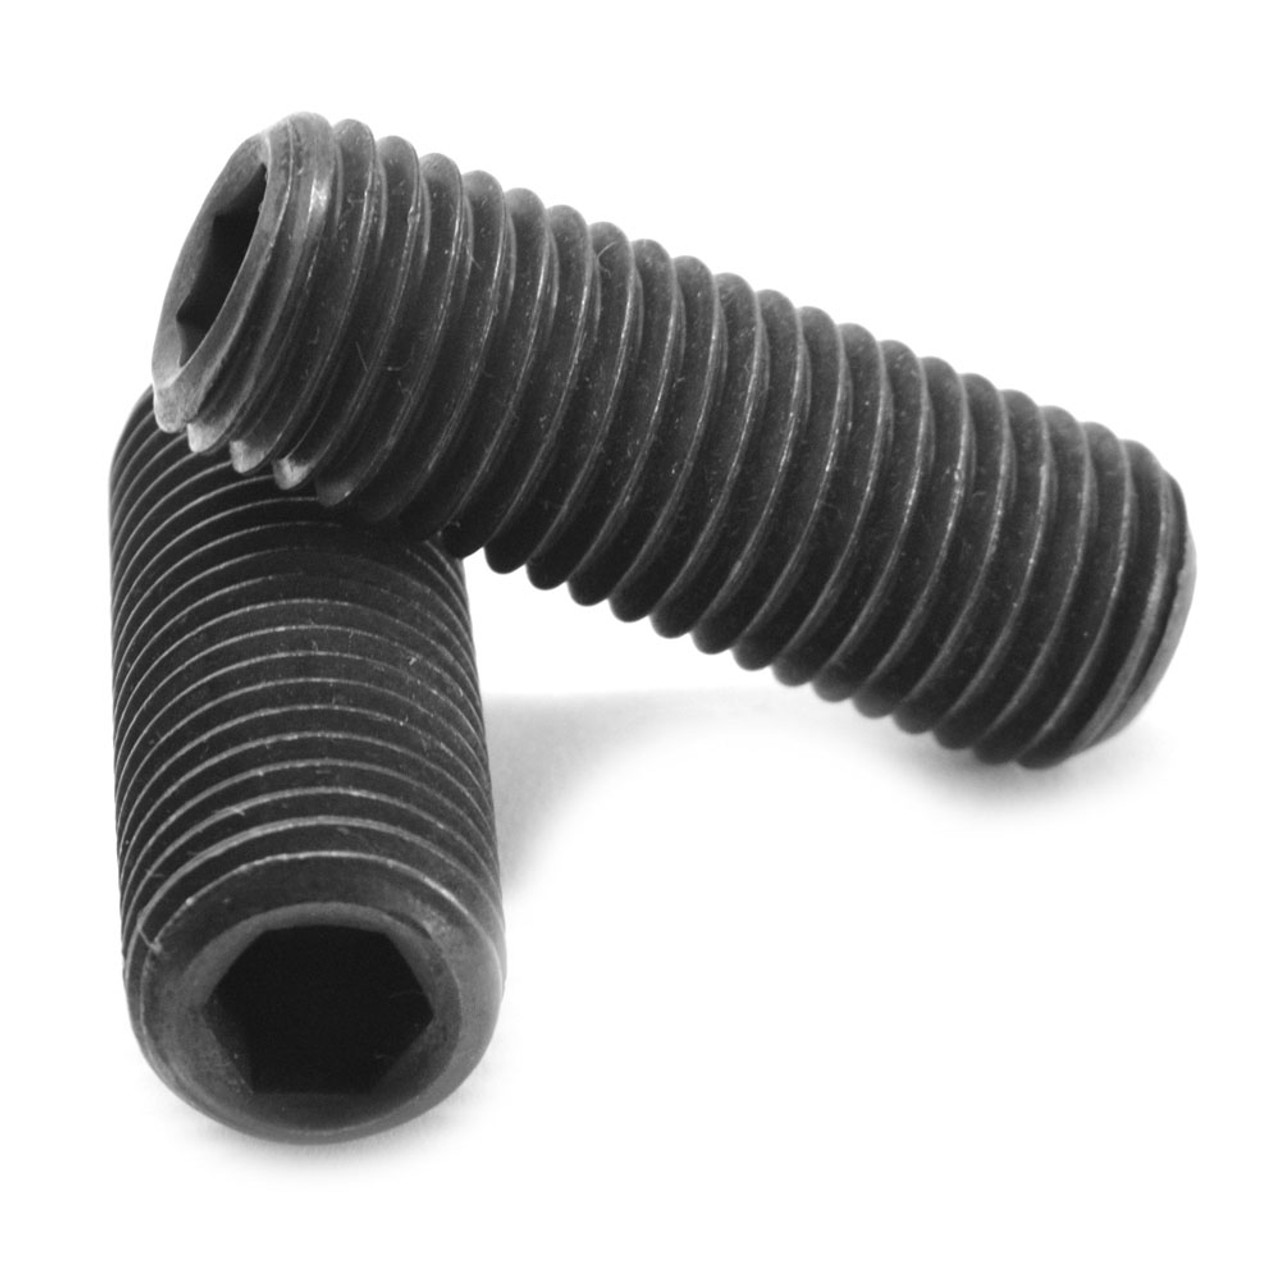 M24 x 3.00 x 70 MM Coarse Thread ISO 4029 / DIN 916 Class 45H Socket Set Screw Cup Point Alloy Steel Black Oxide